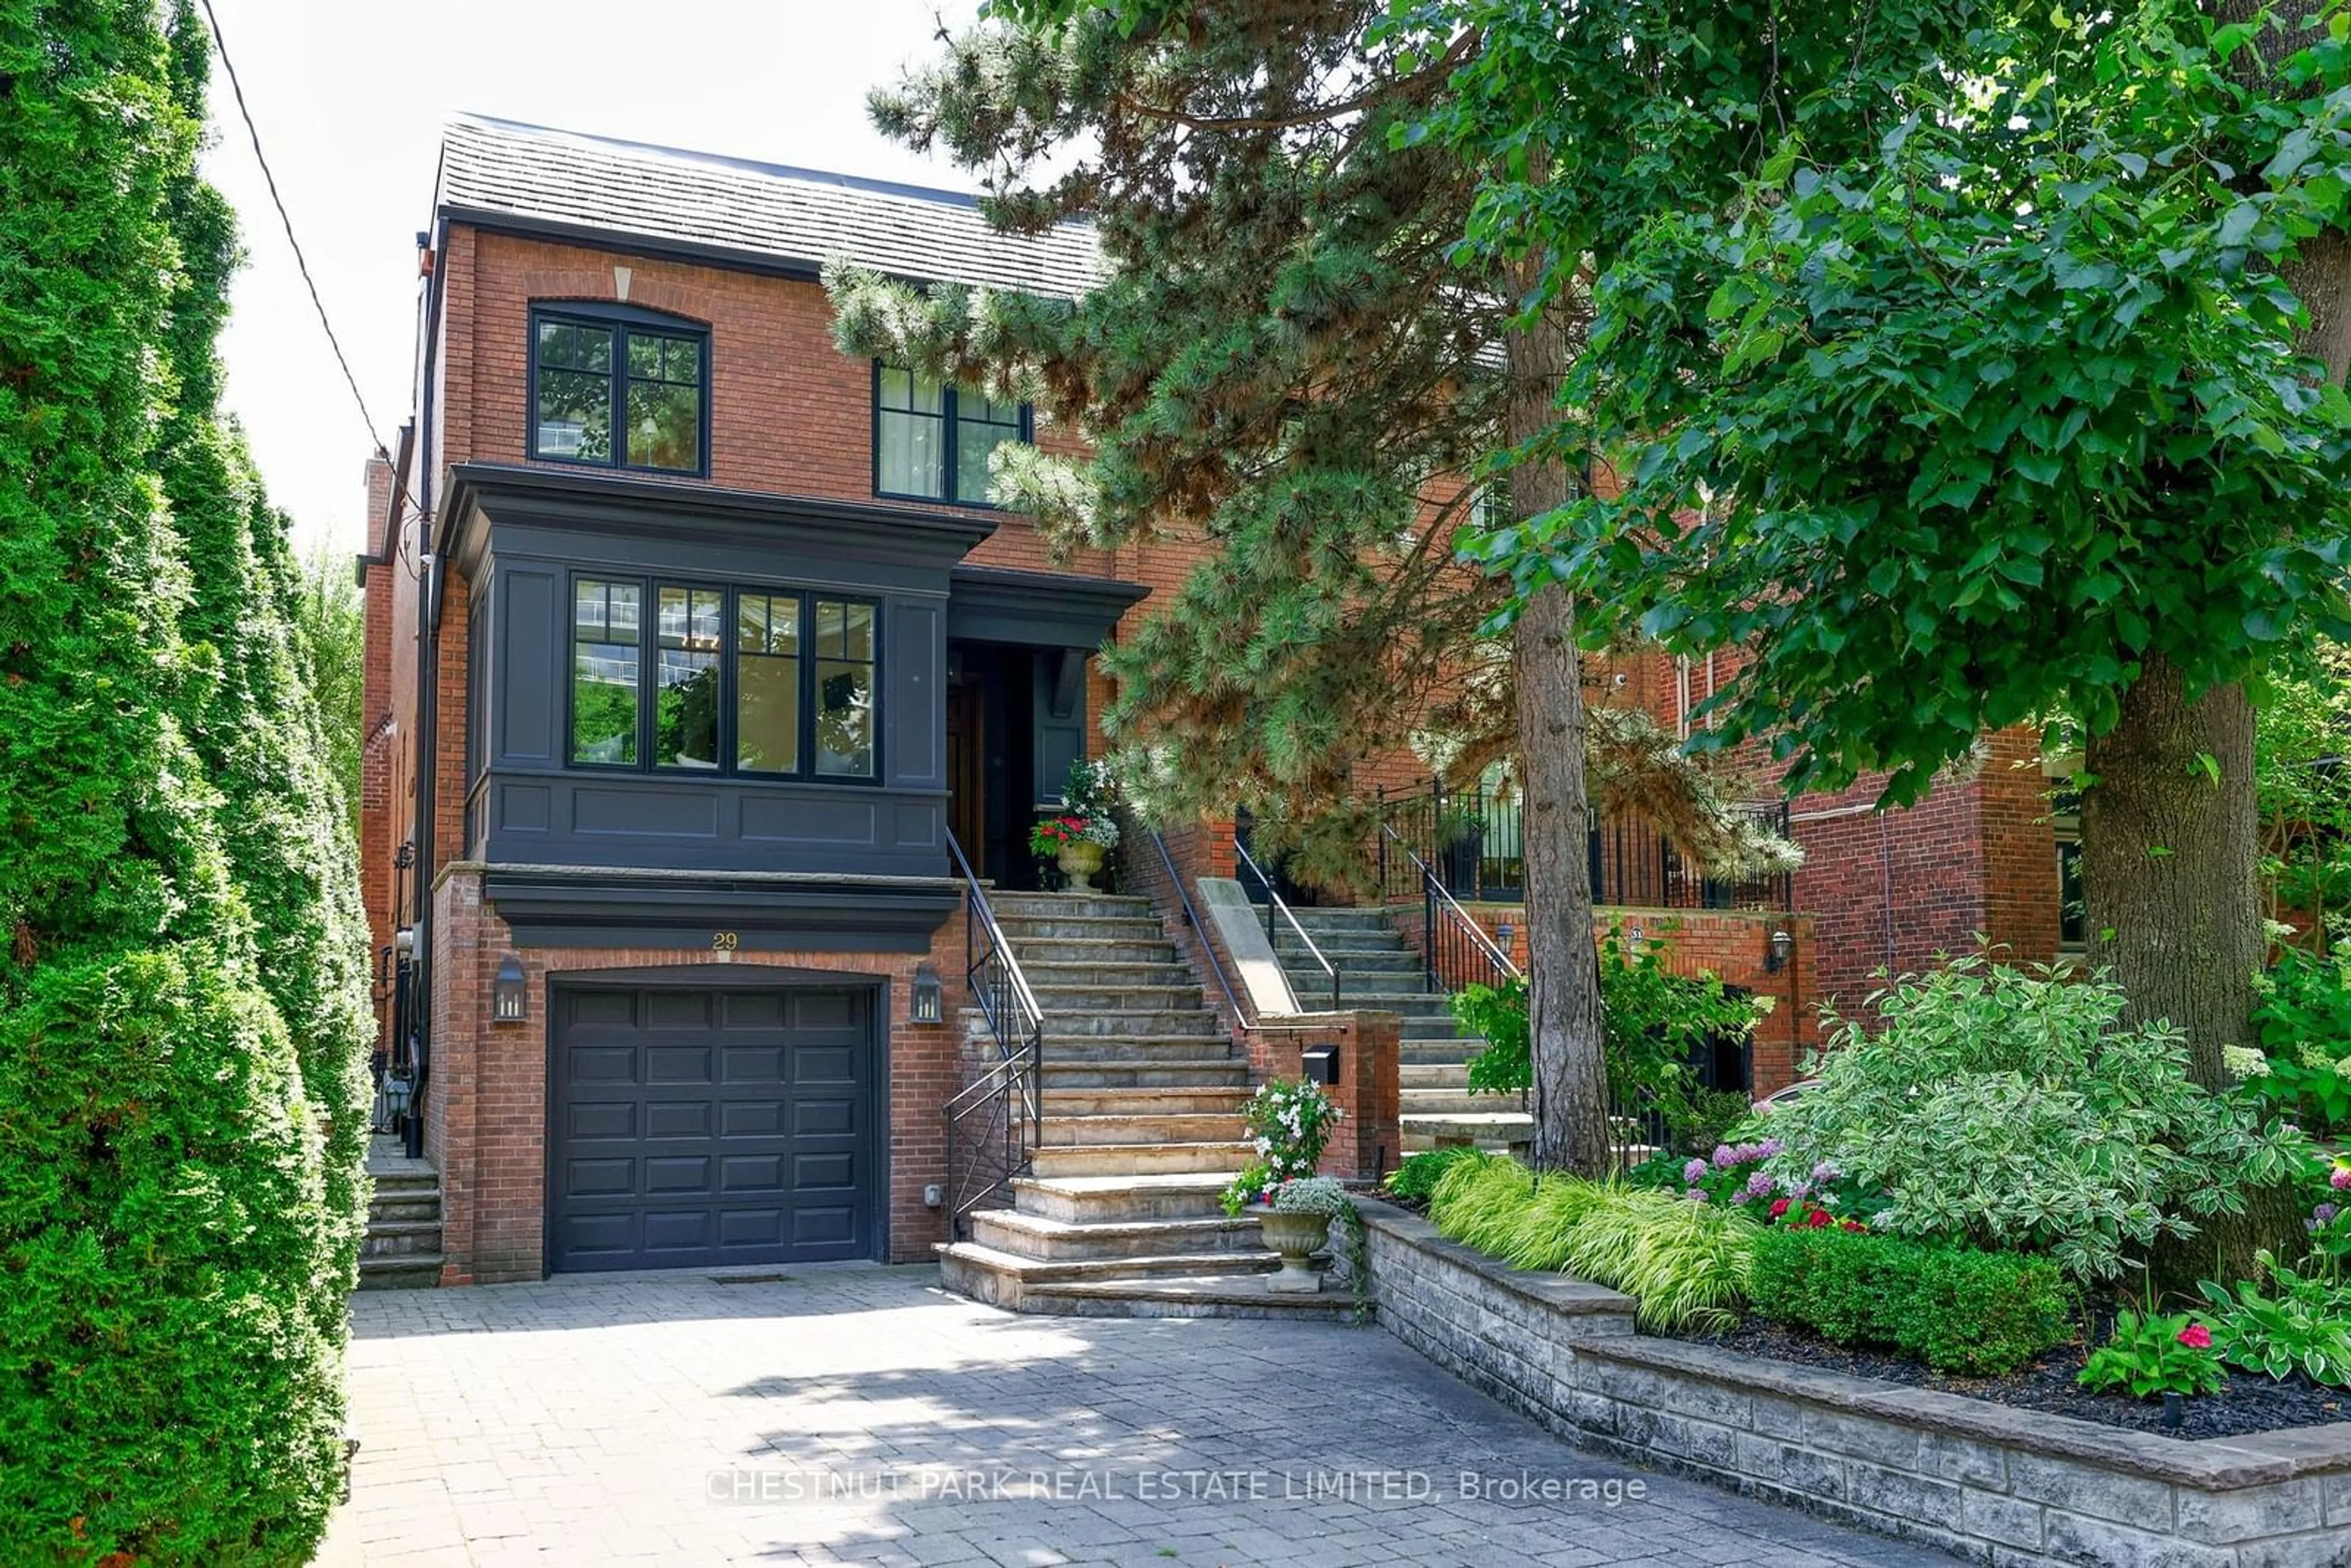 Home with brick exterior material for 29 Gormley Ave, Toronto Ontario M4V 1Y9